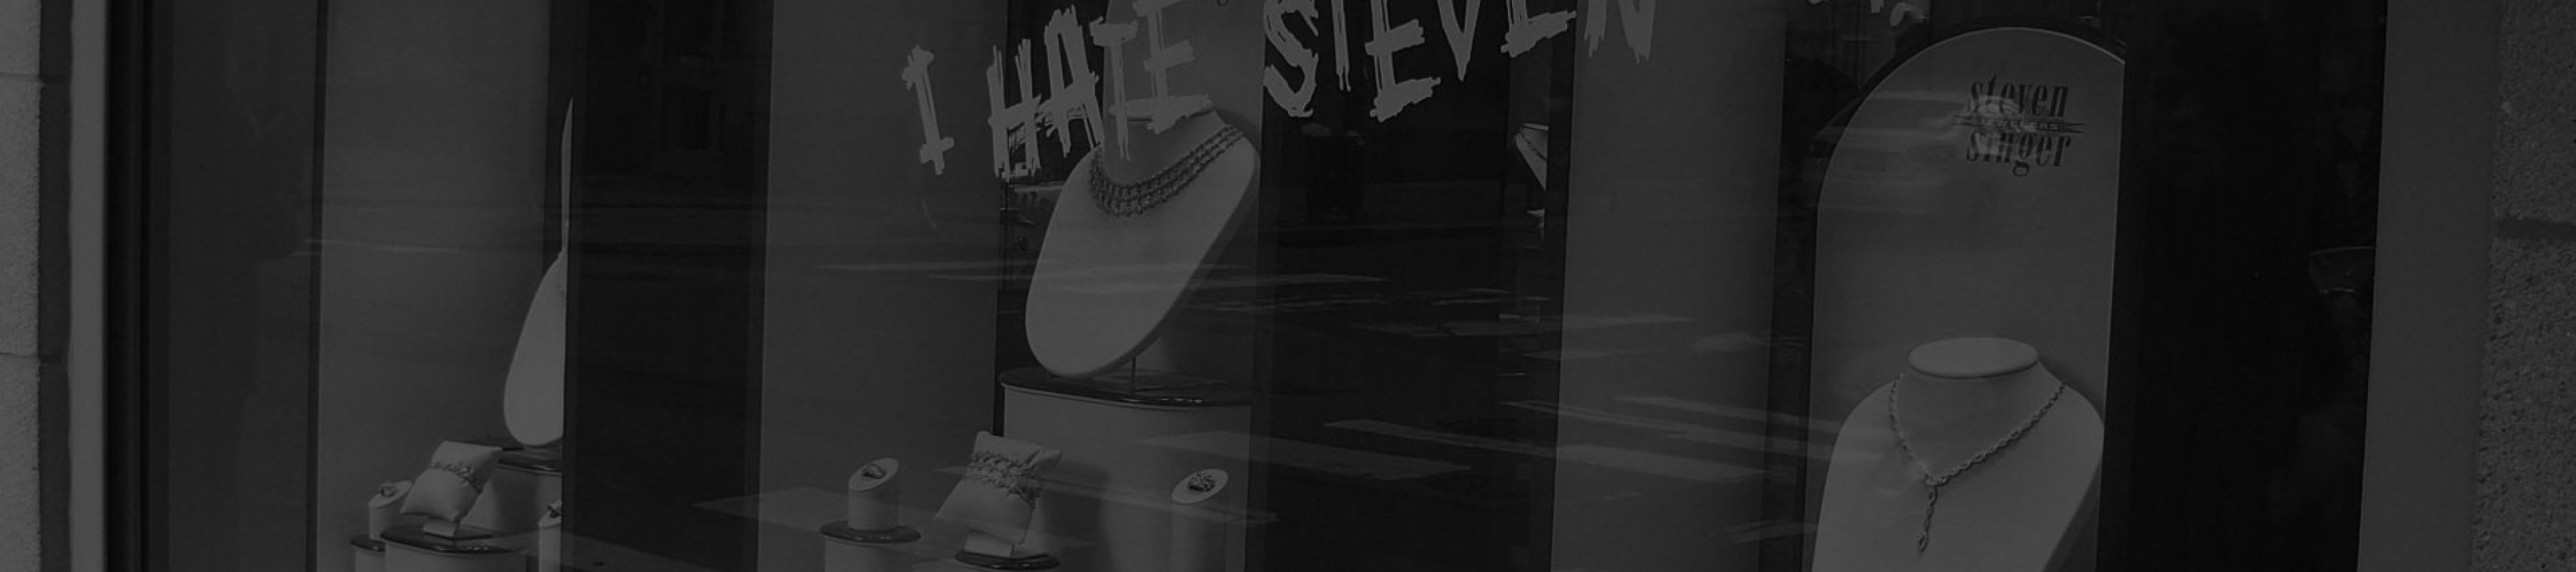 Steven Singer Jewelers store front.